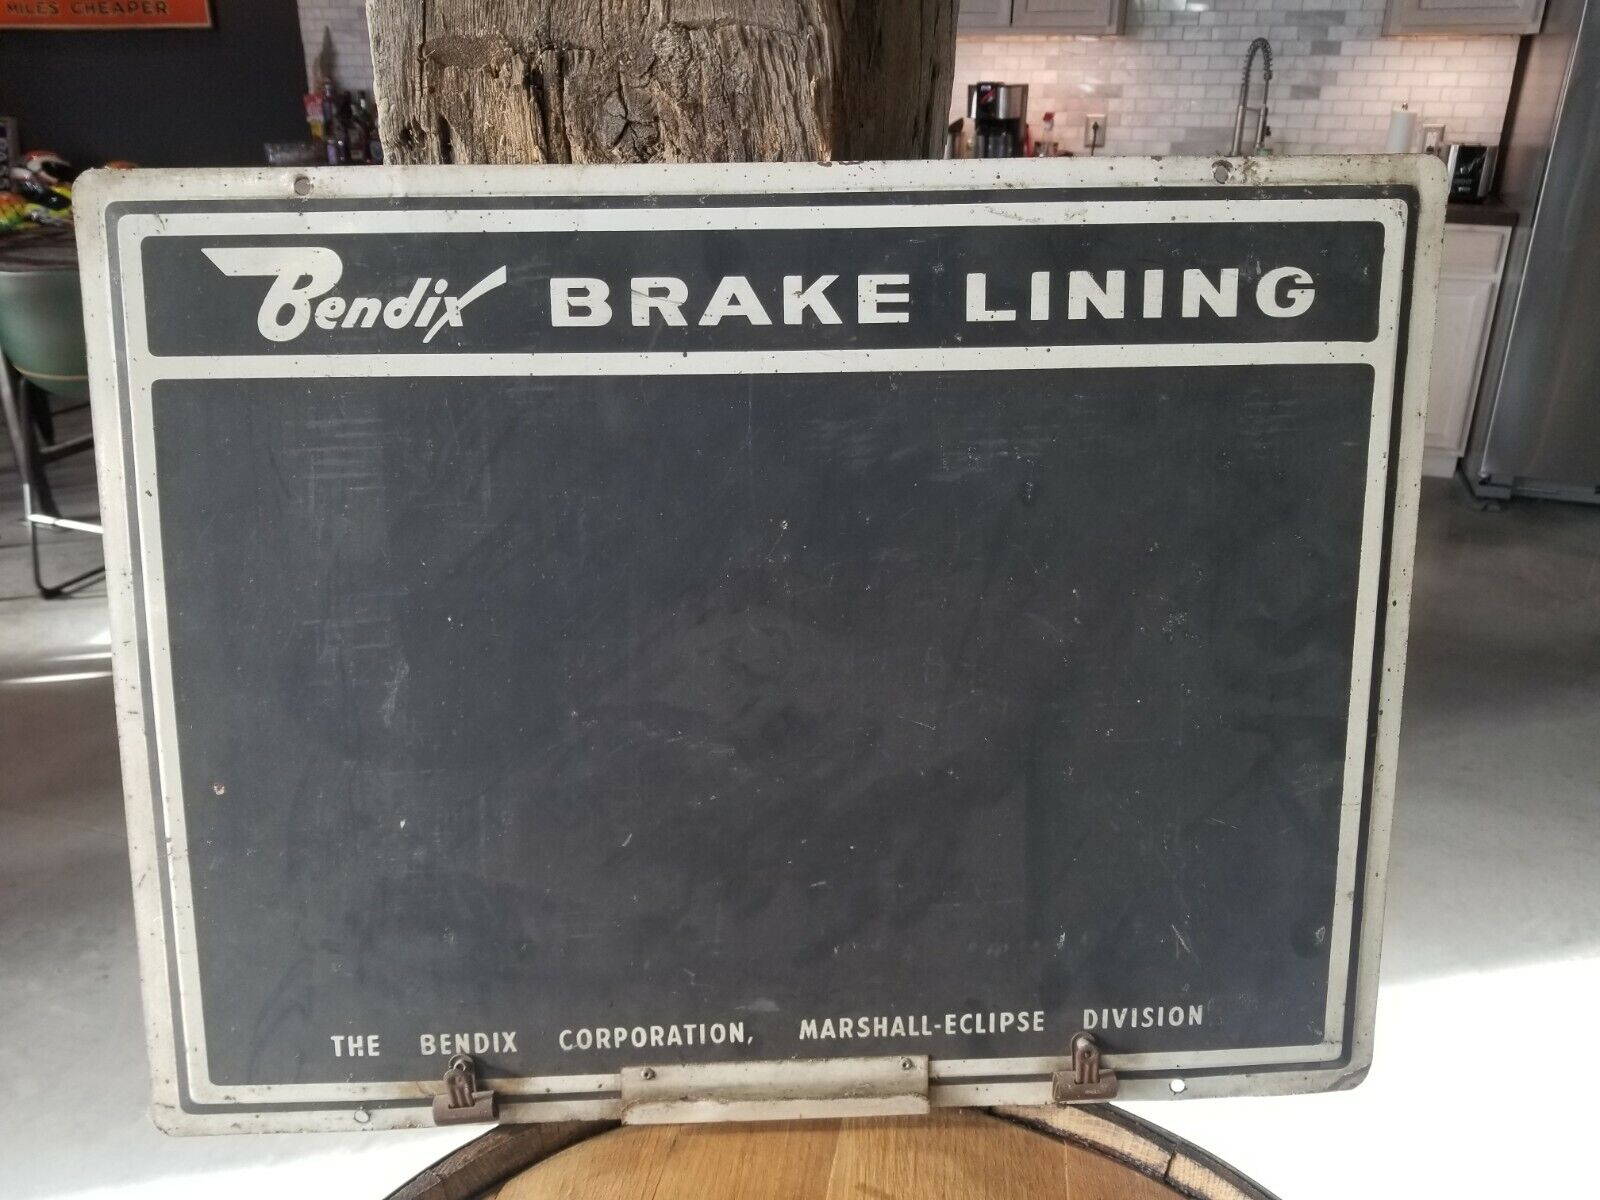 Vintage Bendix brake linings garage chalkboard inv#256